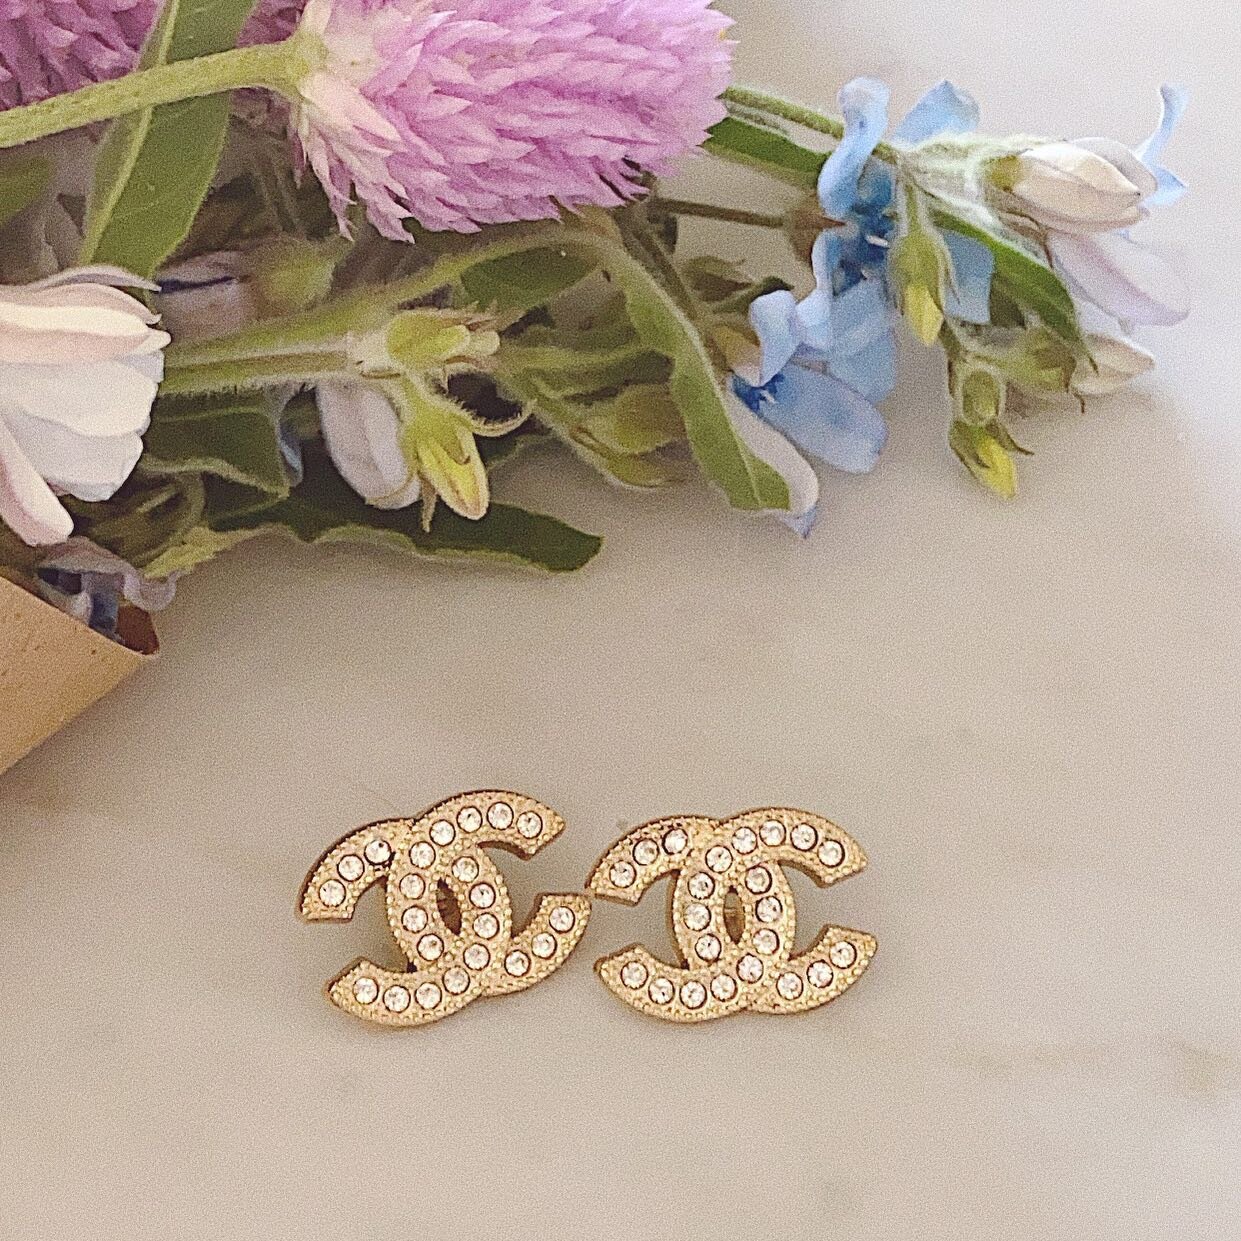 Chanel Gold Black Rhinestone Cc Earrings Auction